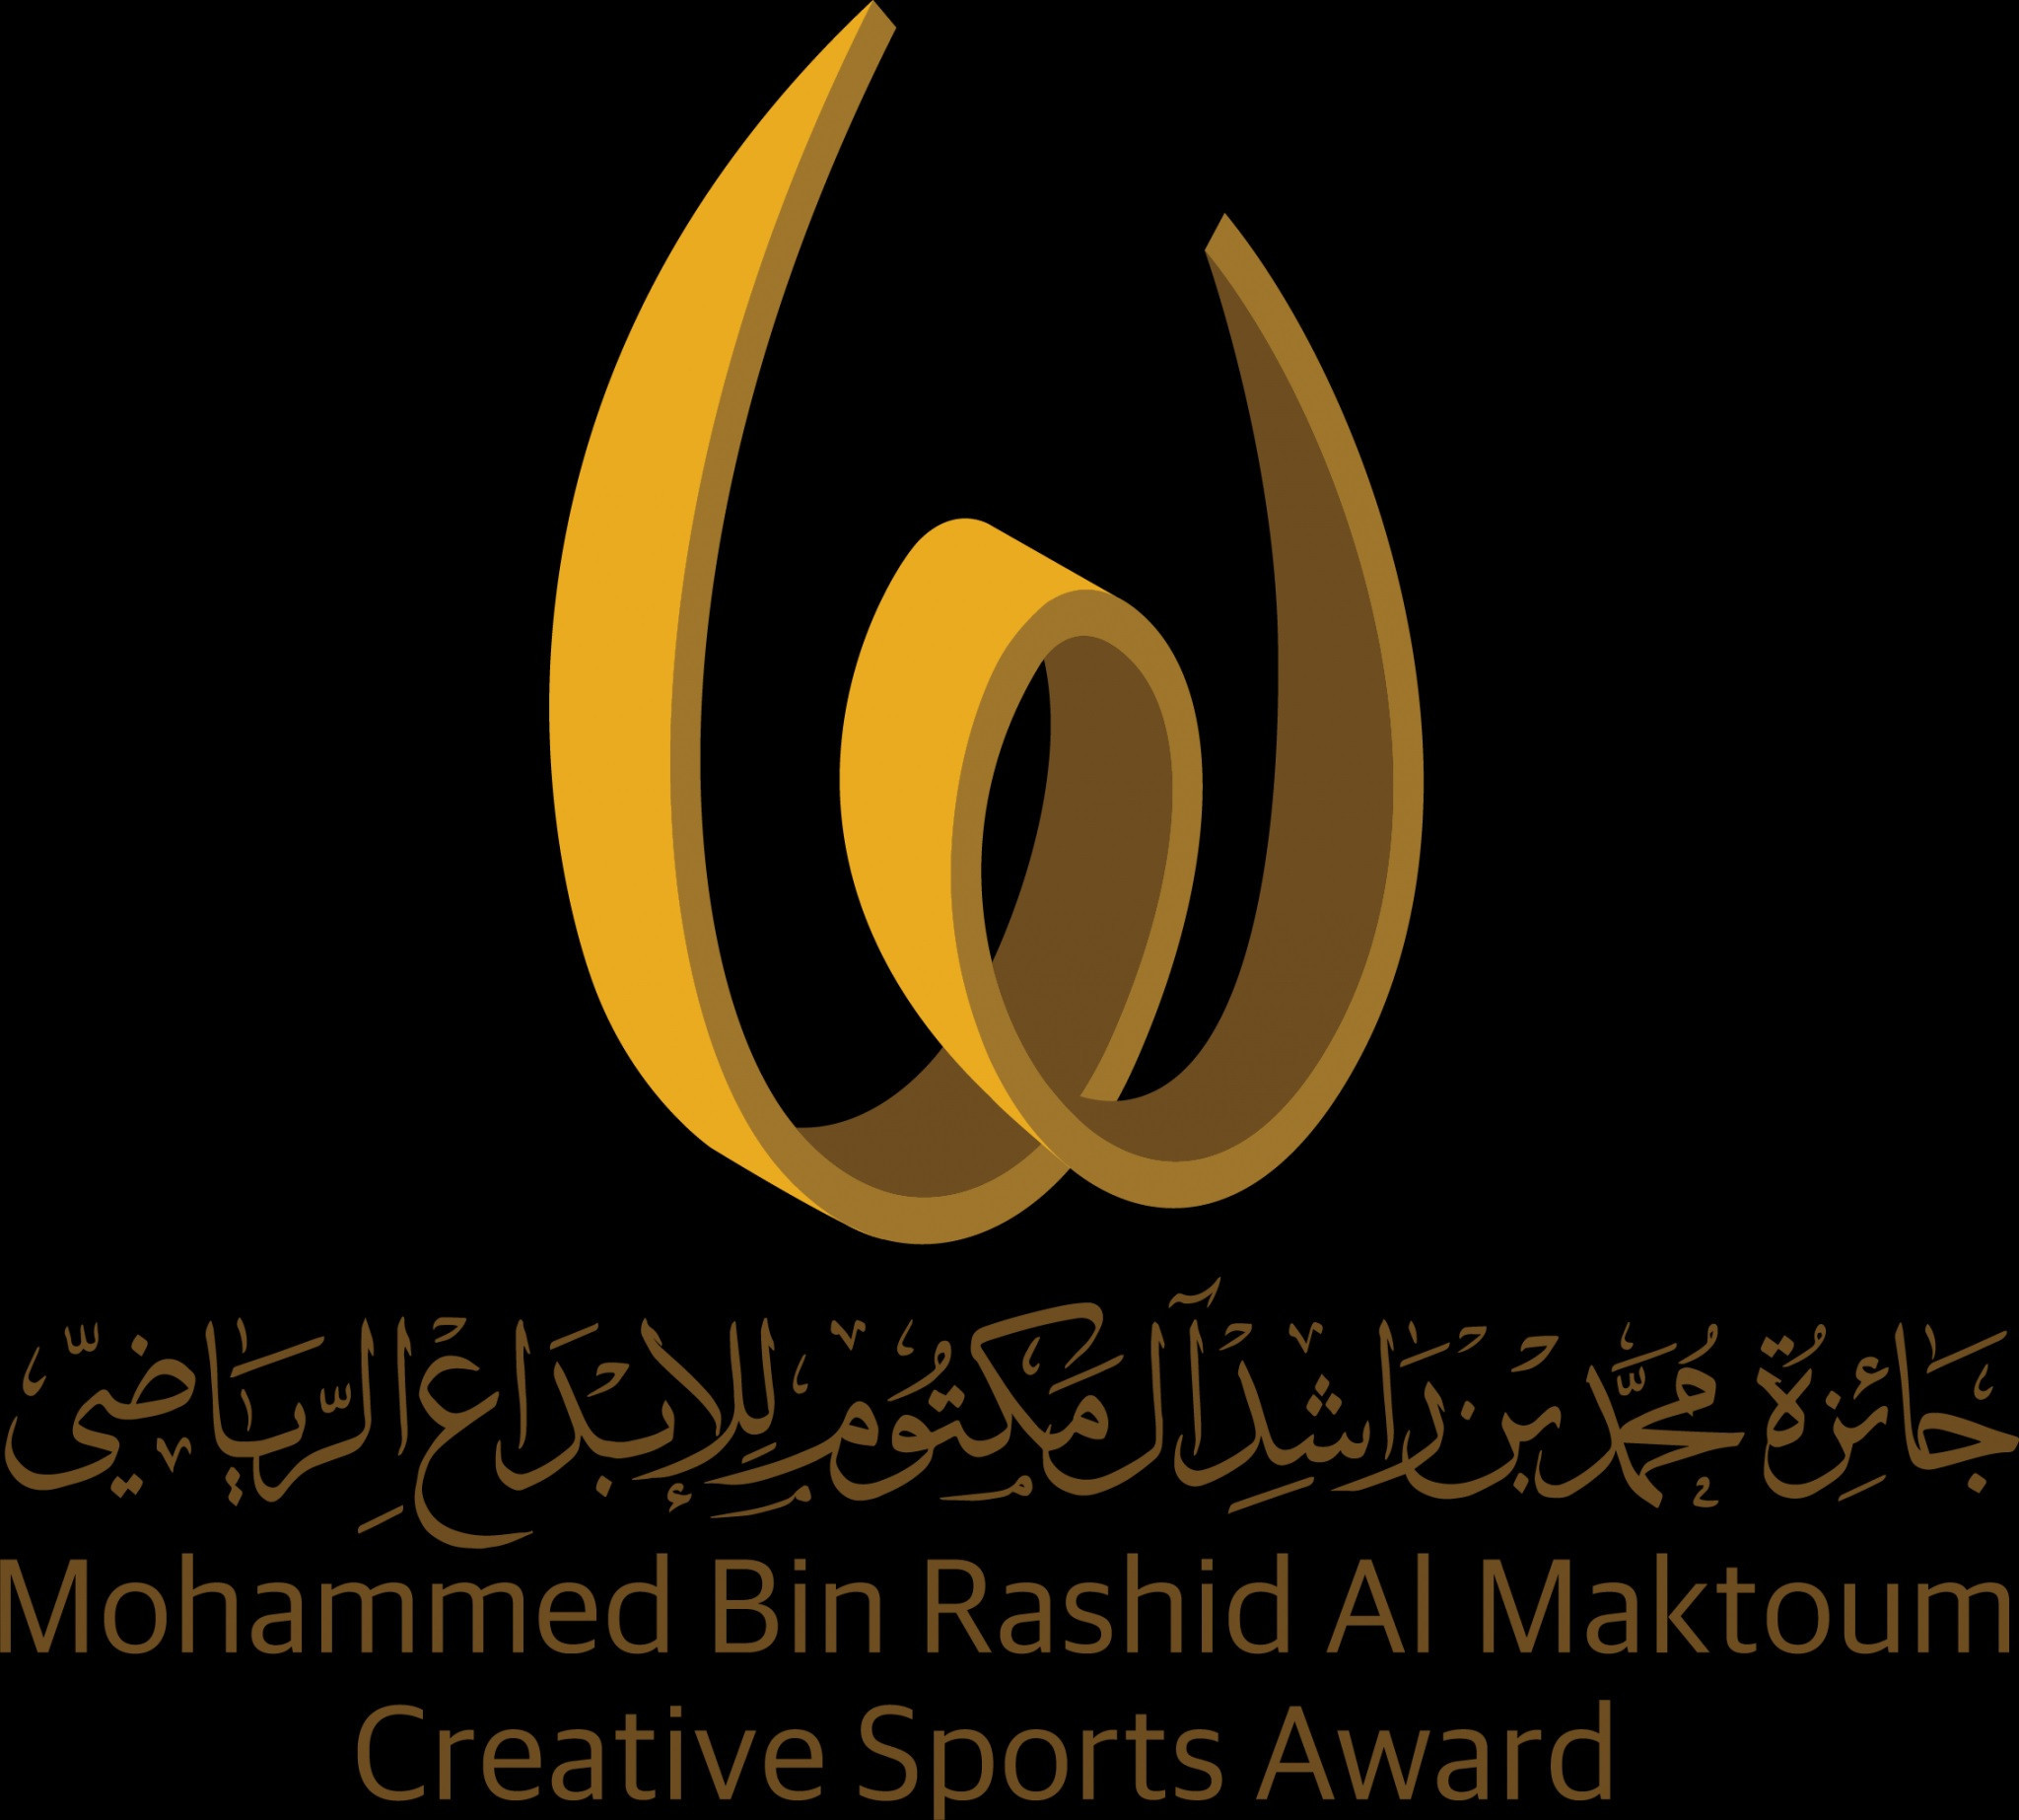 The 11th edition of the Mohammed Bin Rashid Al Maktoum Creative Sports Award has been postponed due to the coronavirus pandemic ©MBRCSA